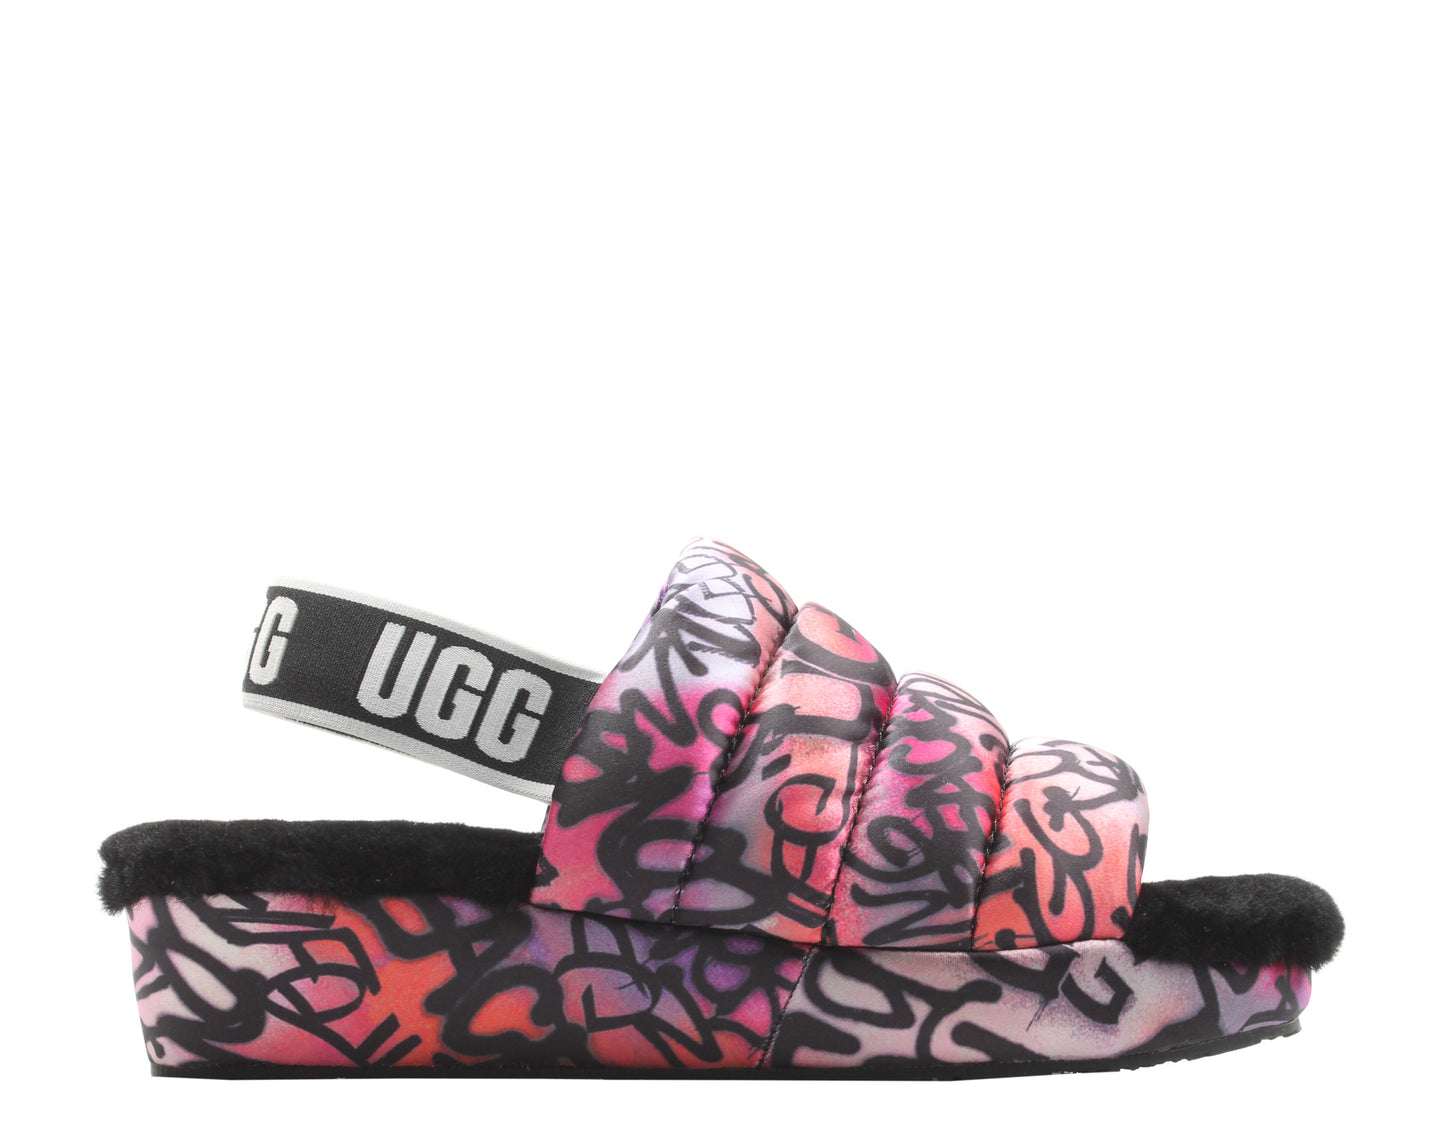 UGG Australia Puff Yeah Pop Graffiti Women's Sandals